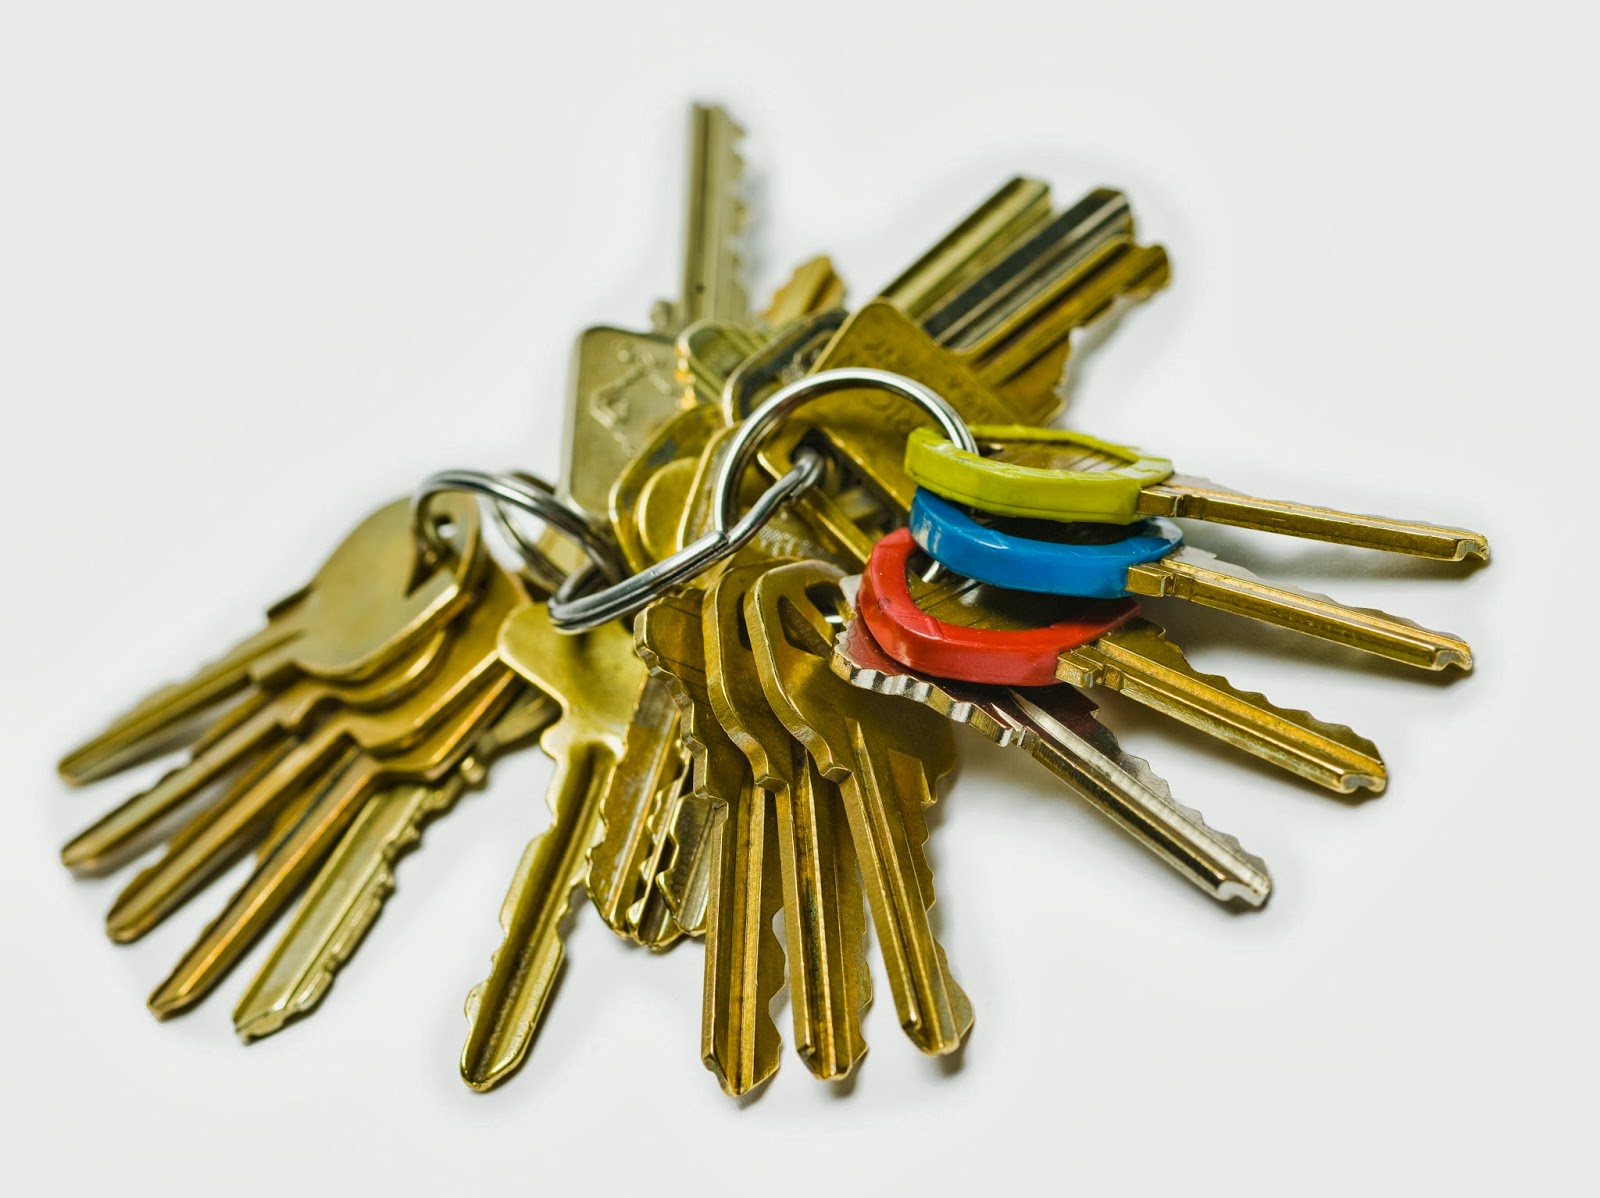 master key system for landlords